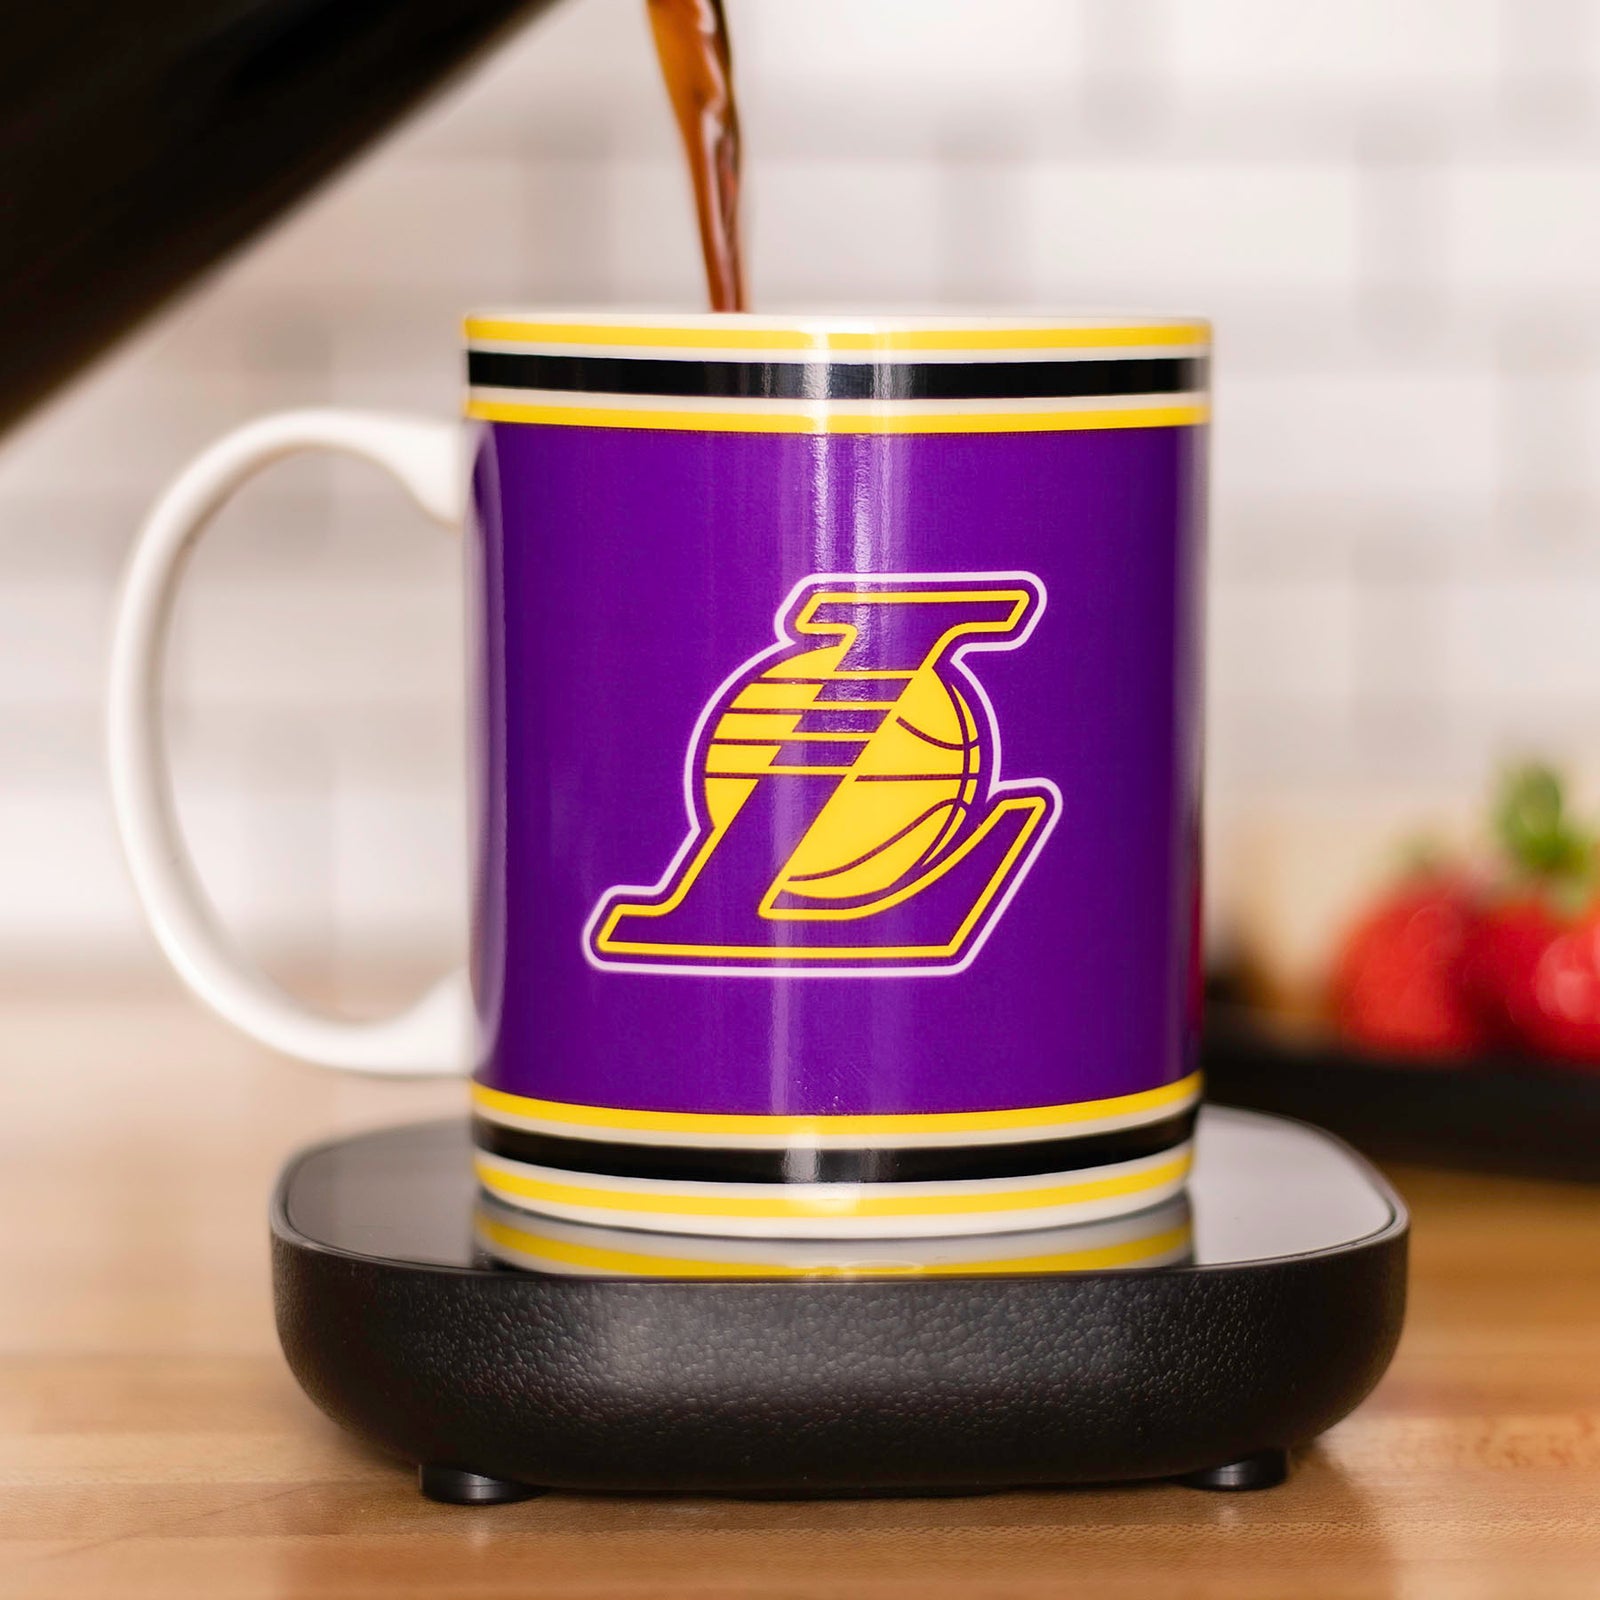 Uncanny Brands NBA Milwaukee Bucks Bango Mascot Mug Warmer with Mug – Keeps  Your Favorite Beverage Warm - Auto Shut On/Off